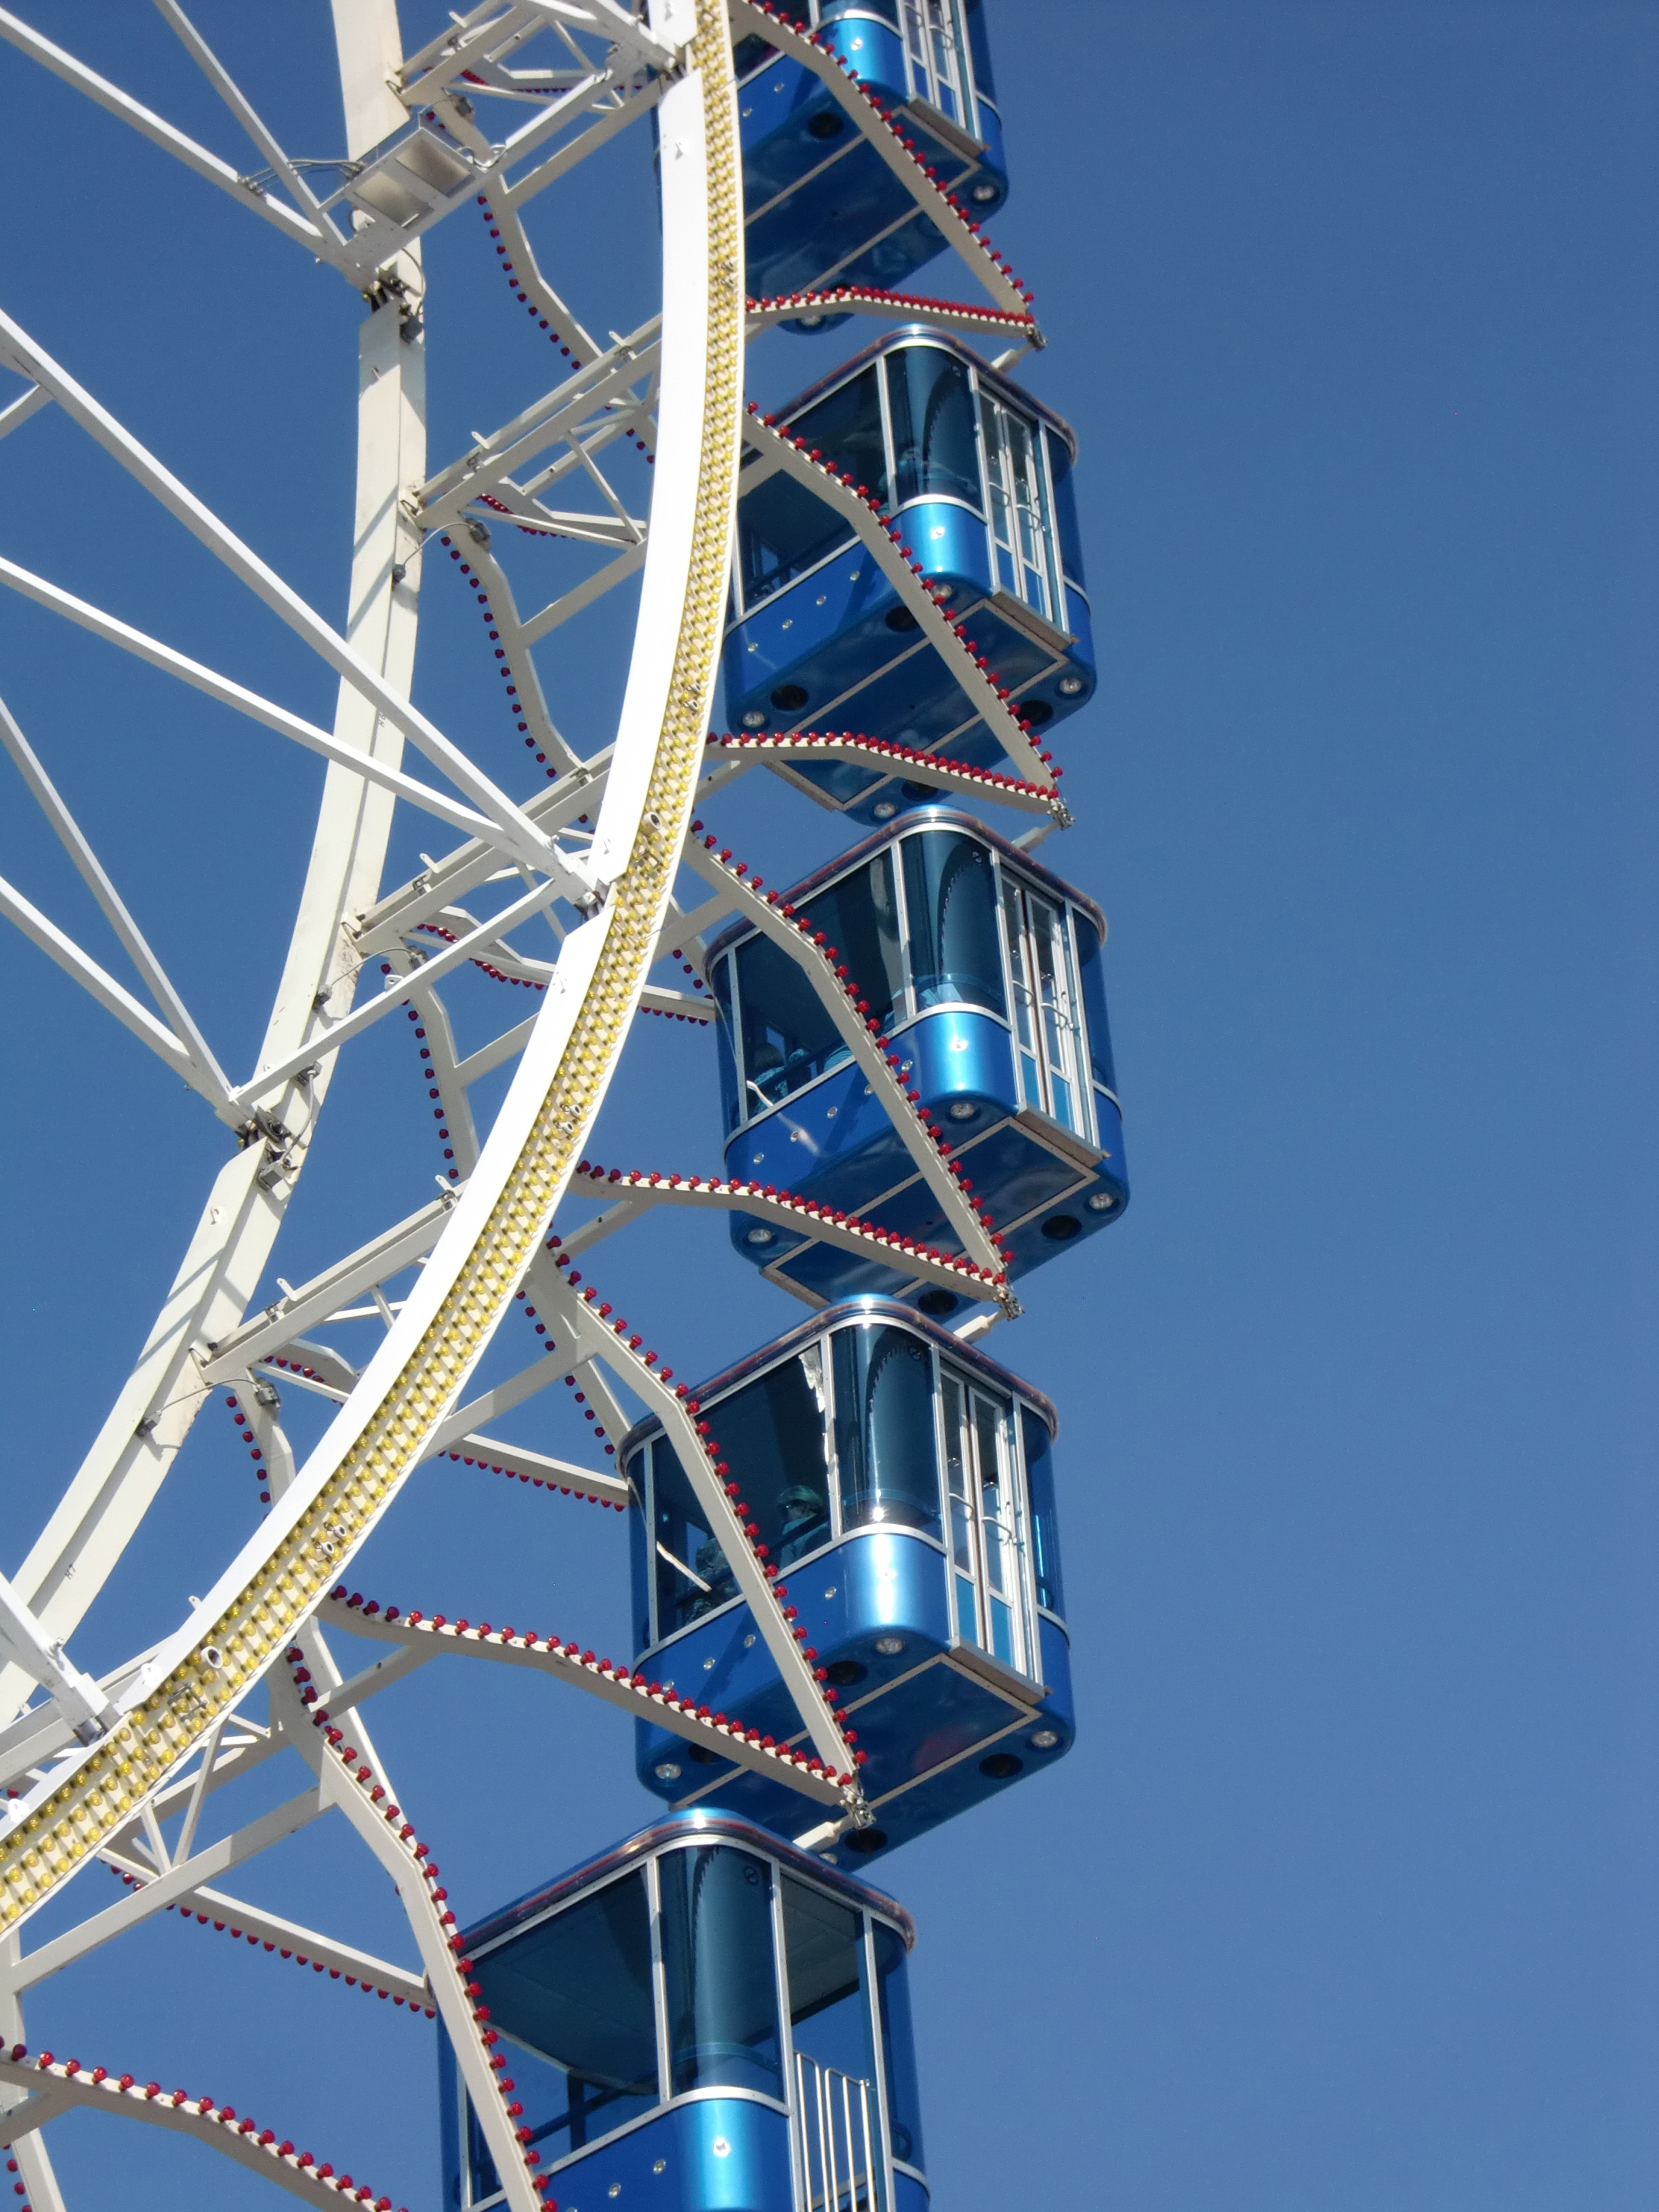 blue and white ferris wheel